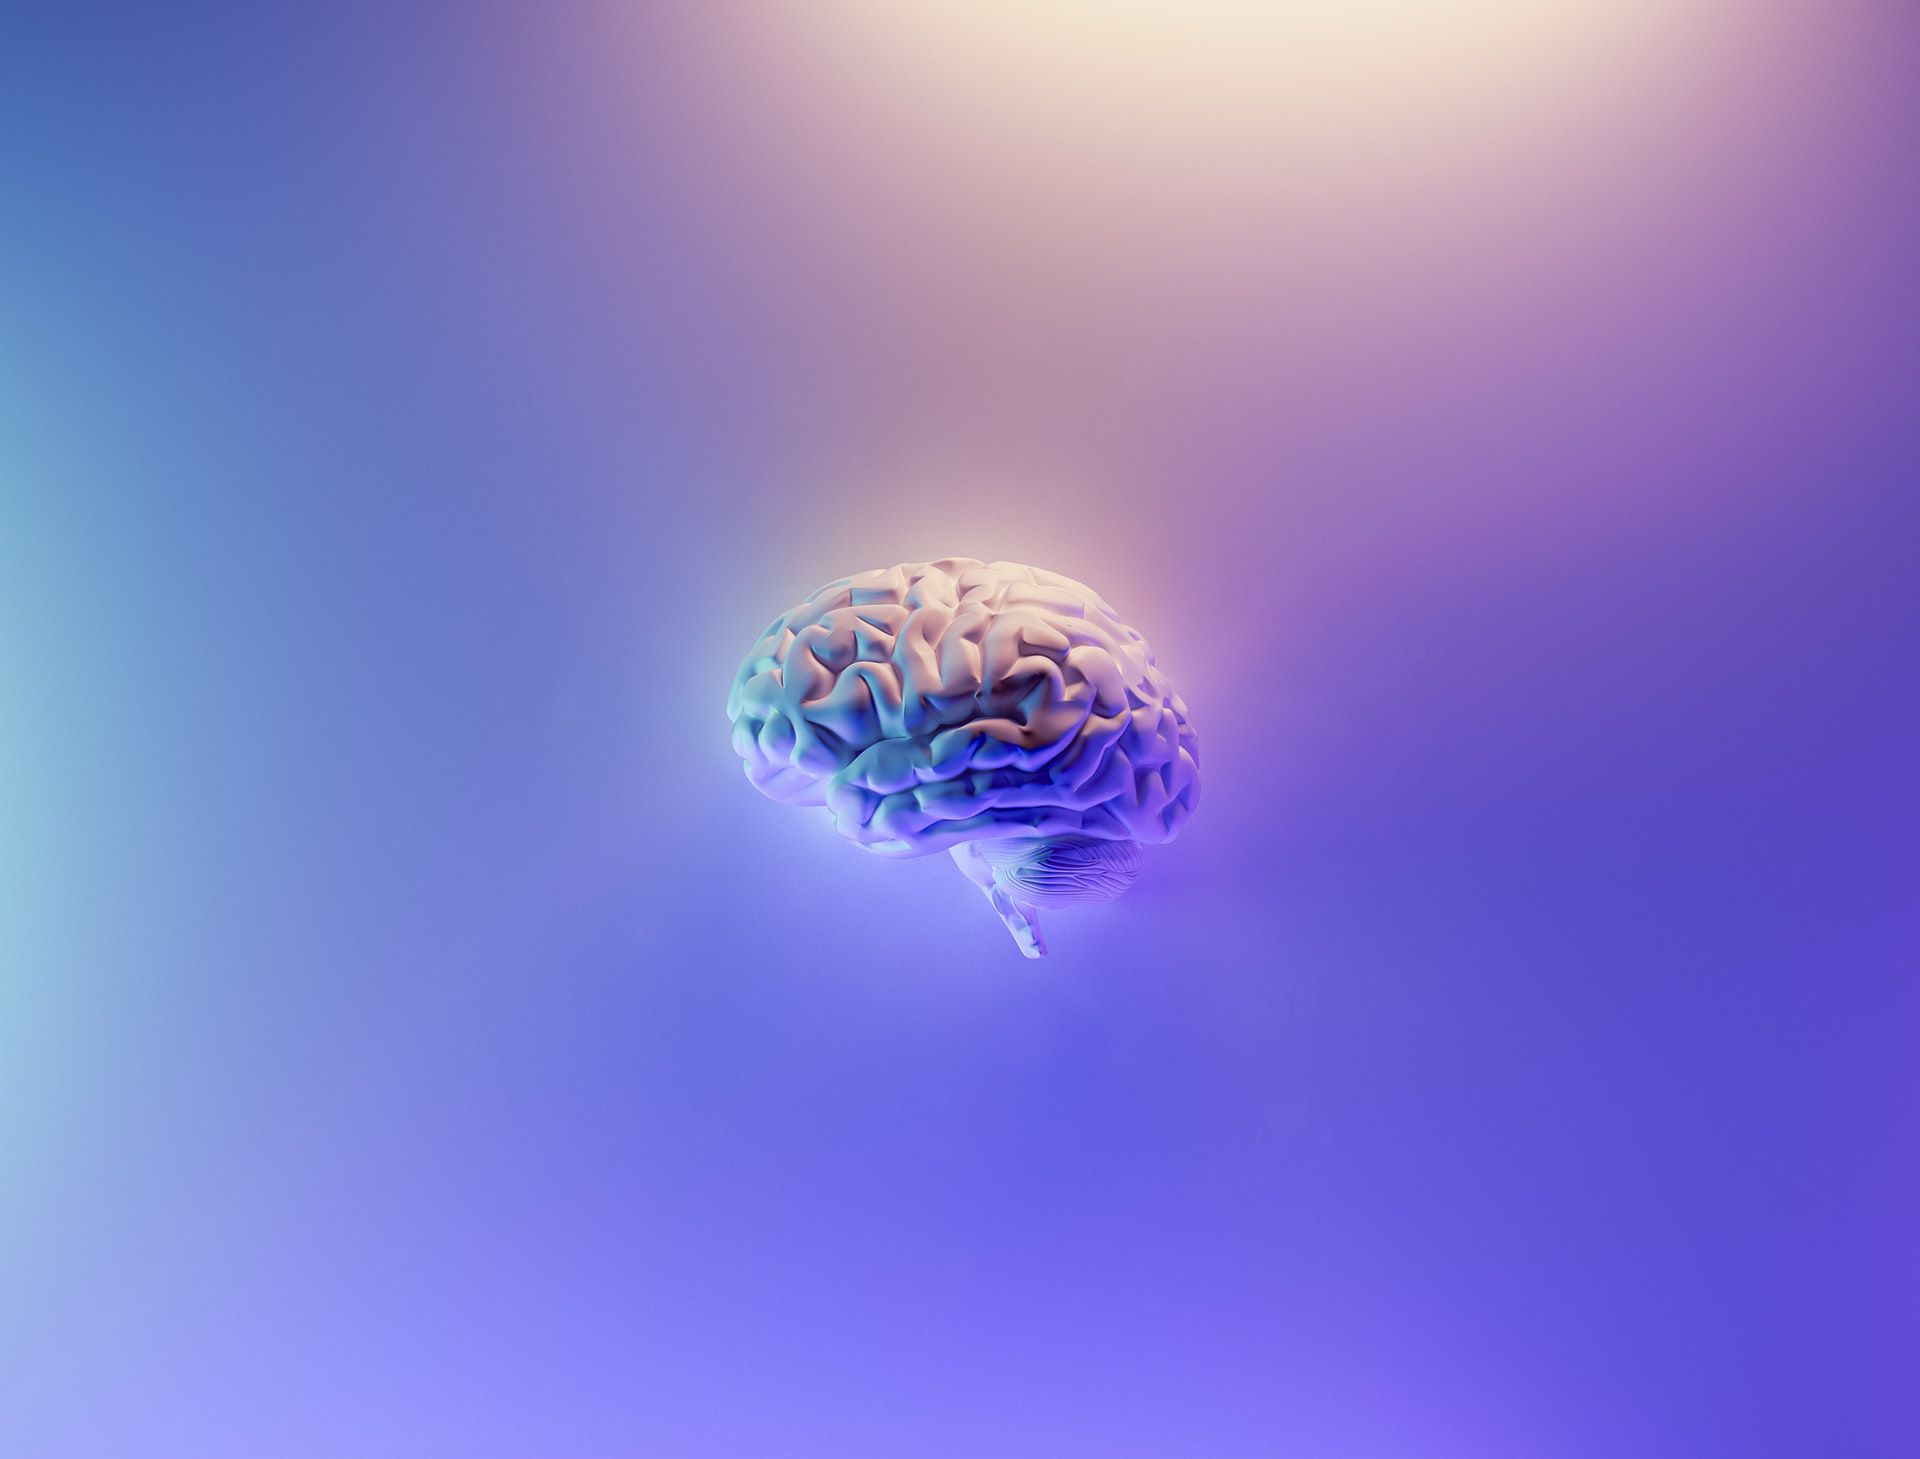 Gedächtnistraining statt Gehirndoping: So bekommst du einen klareren Kopf…